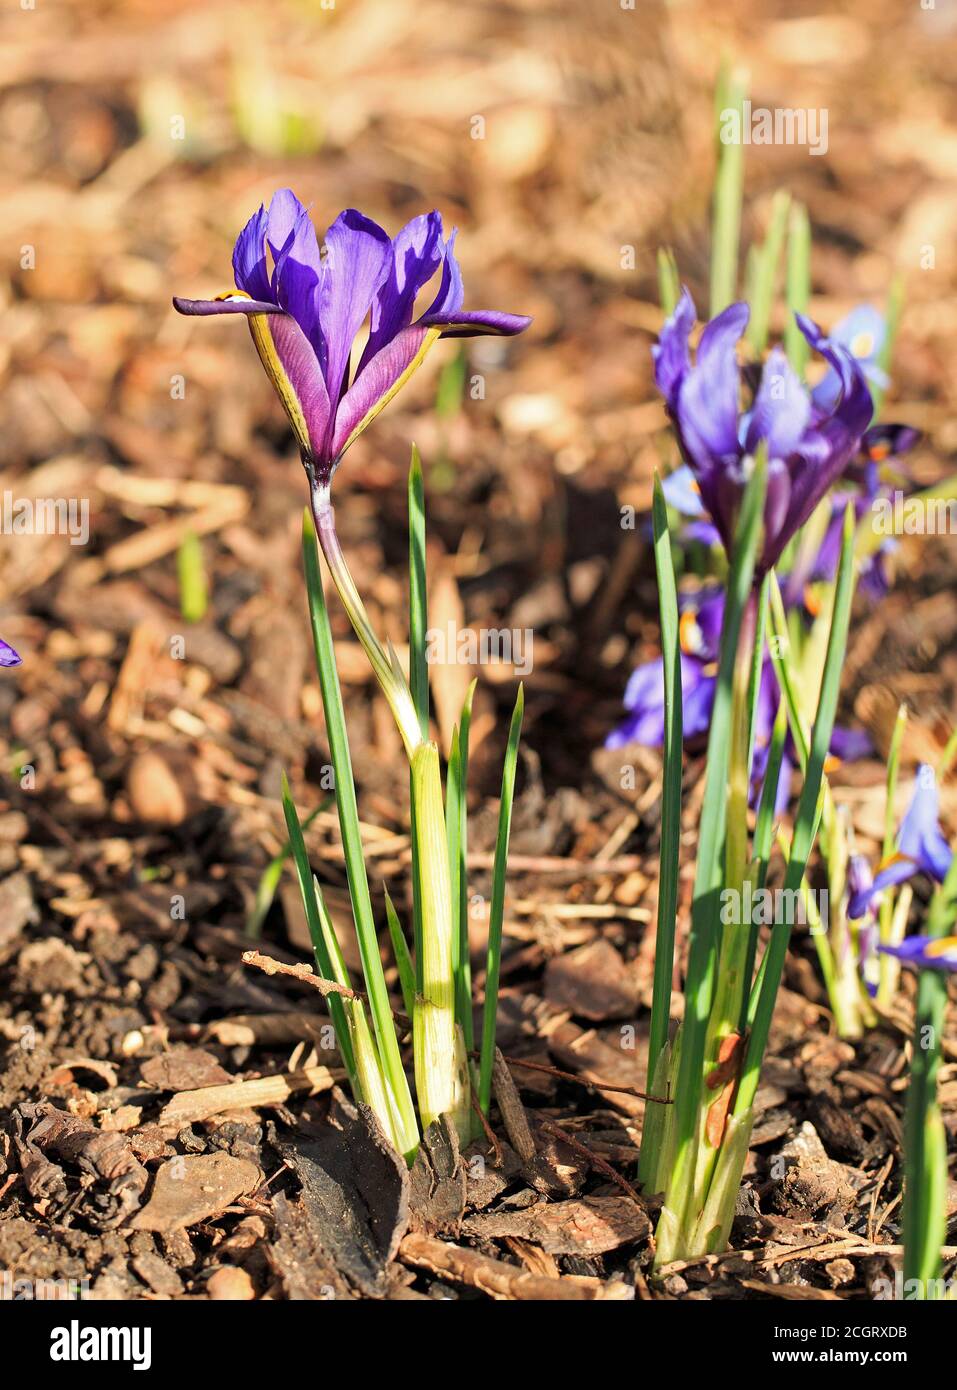 Newly flowering Purple Dwarf Iris growing against a natural plain garden background. Stock Photo